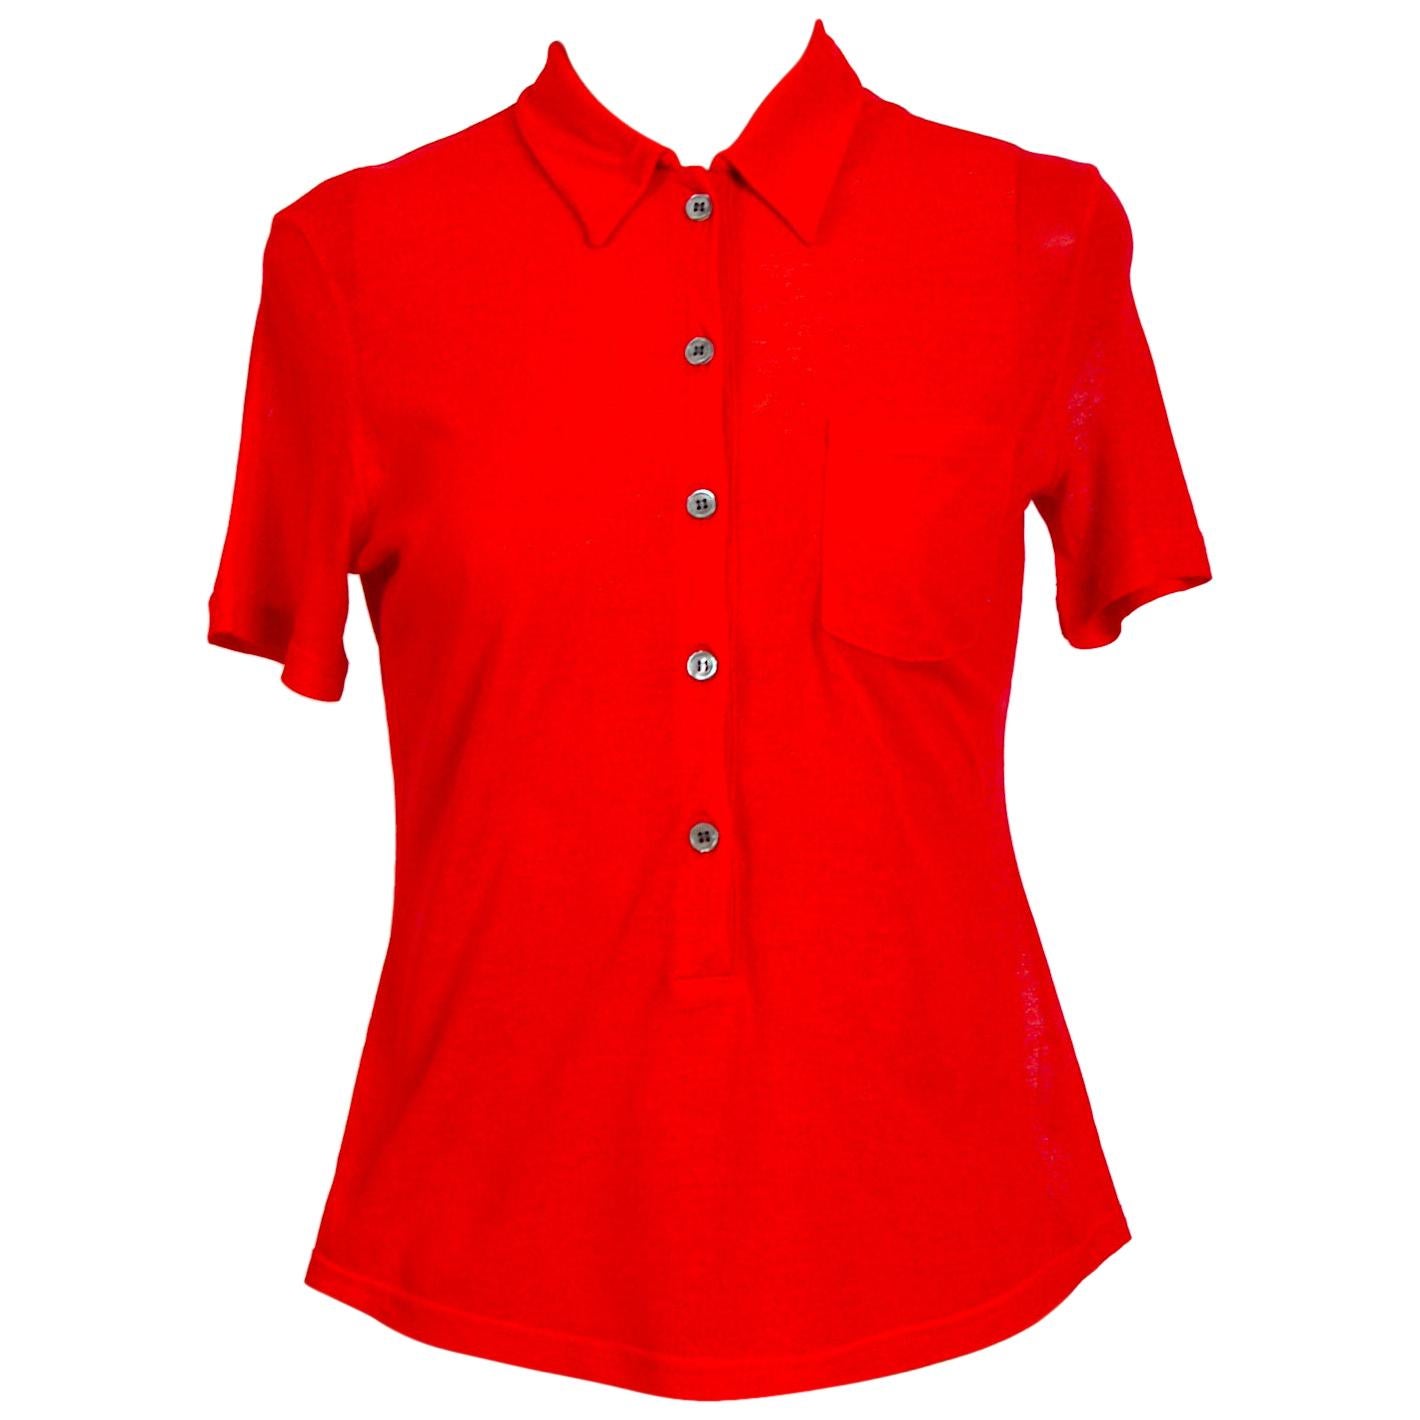 Helmut Lang collectors vintage 1998 red cotton jersey top For Sale